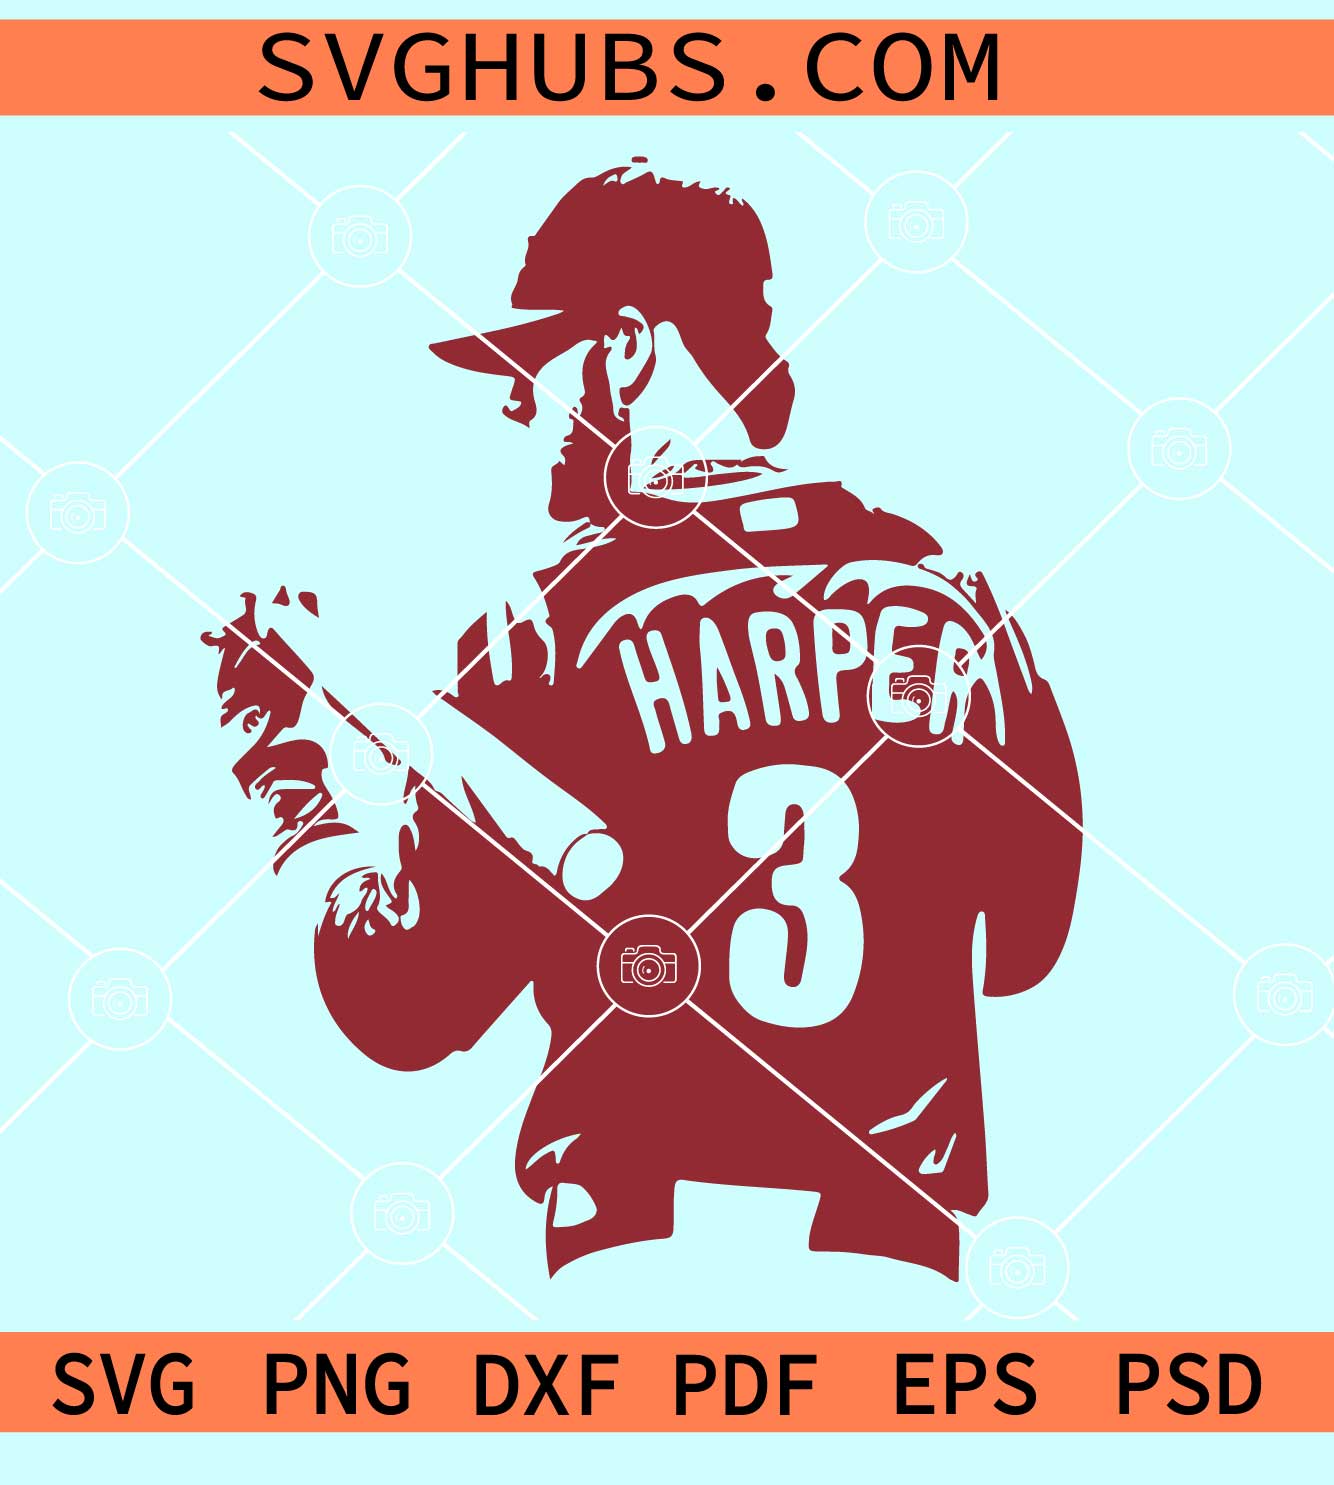 Bryce Harper SVG, Baseball player SVG, Phillies SVG, Philadelphia Phillies SVG